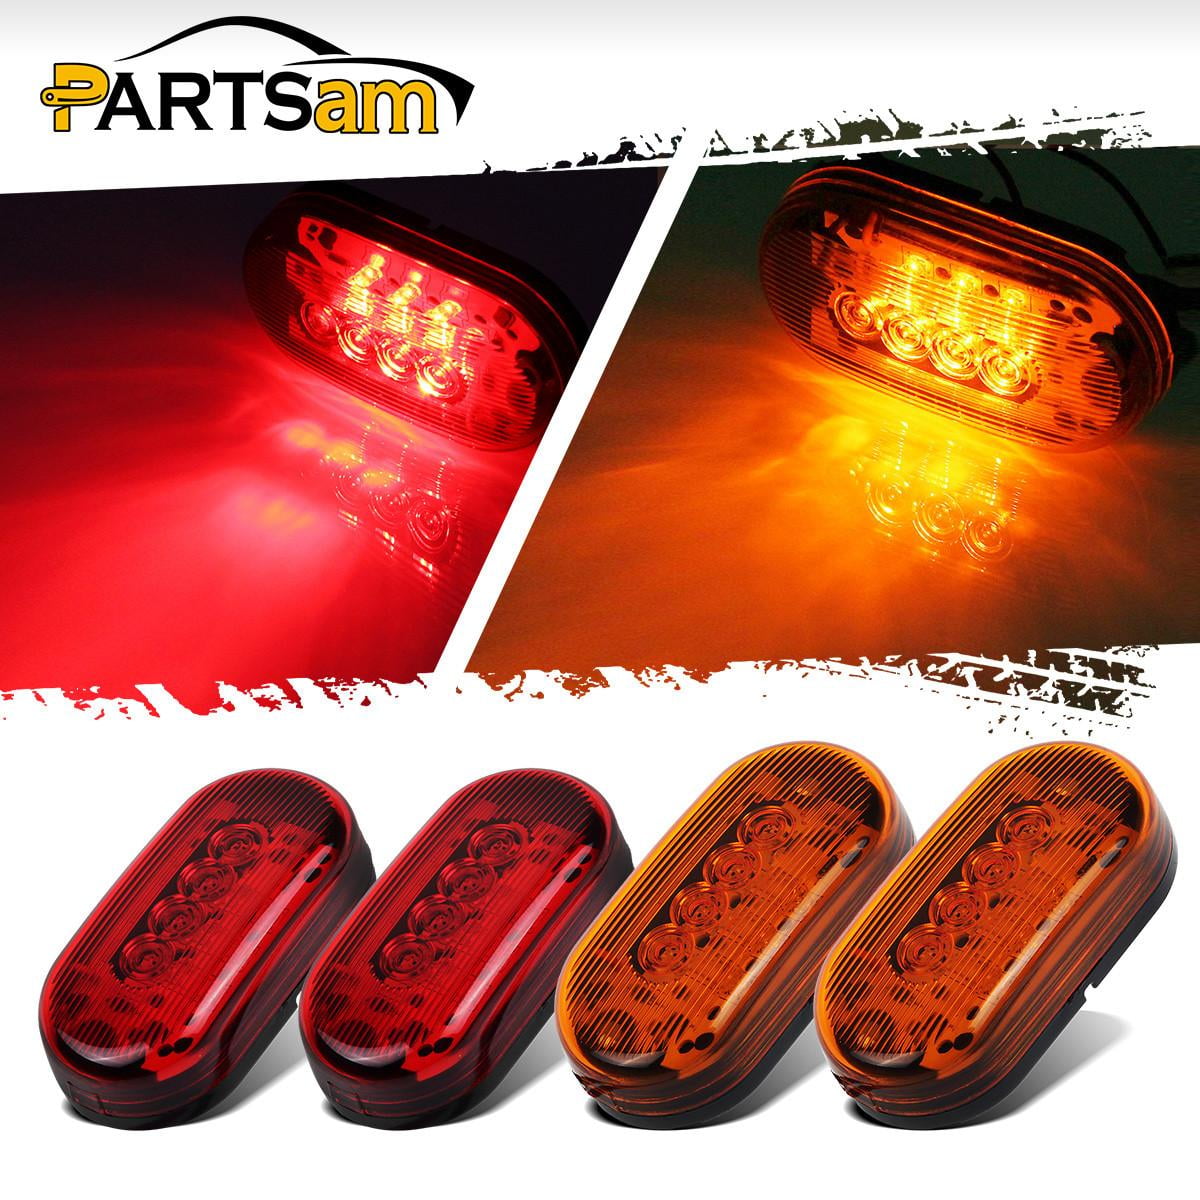 Partsam 4Pcs 6 x 2 Trailer-Style Rectangular LED Side Marker Clearance/Turn Signal Lights 13 LED Rectangle 12V Truck Trailer Camper 2 Amber + 2 Red 